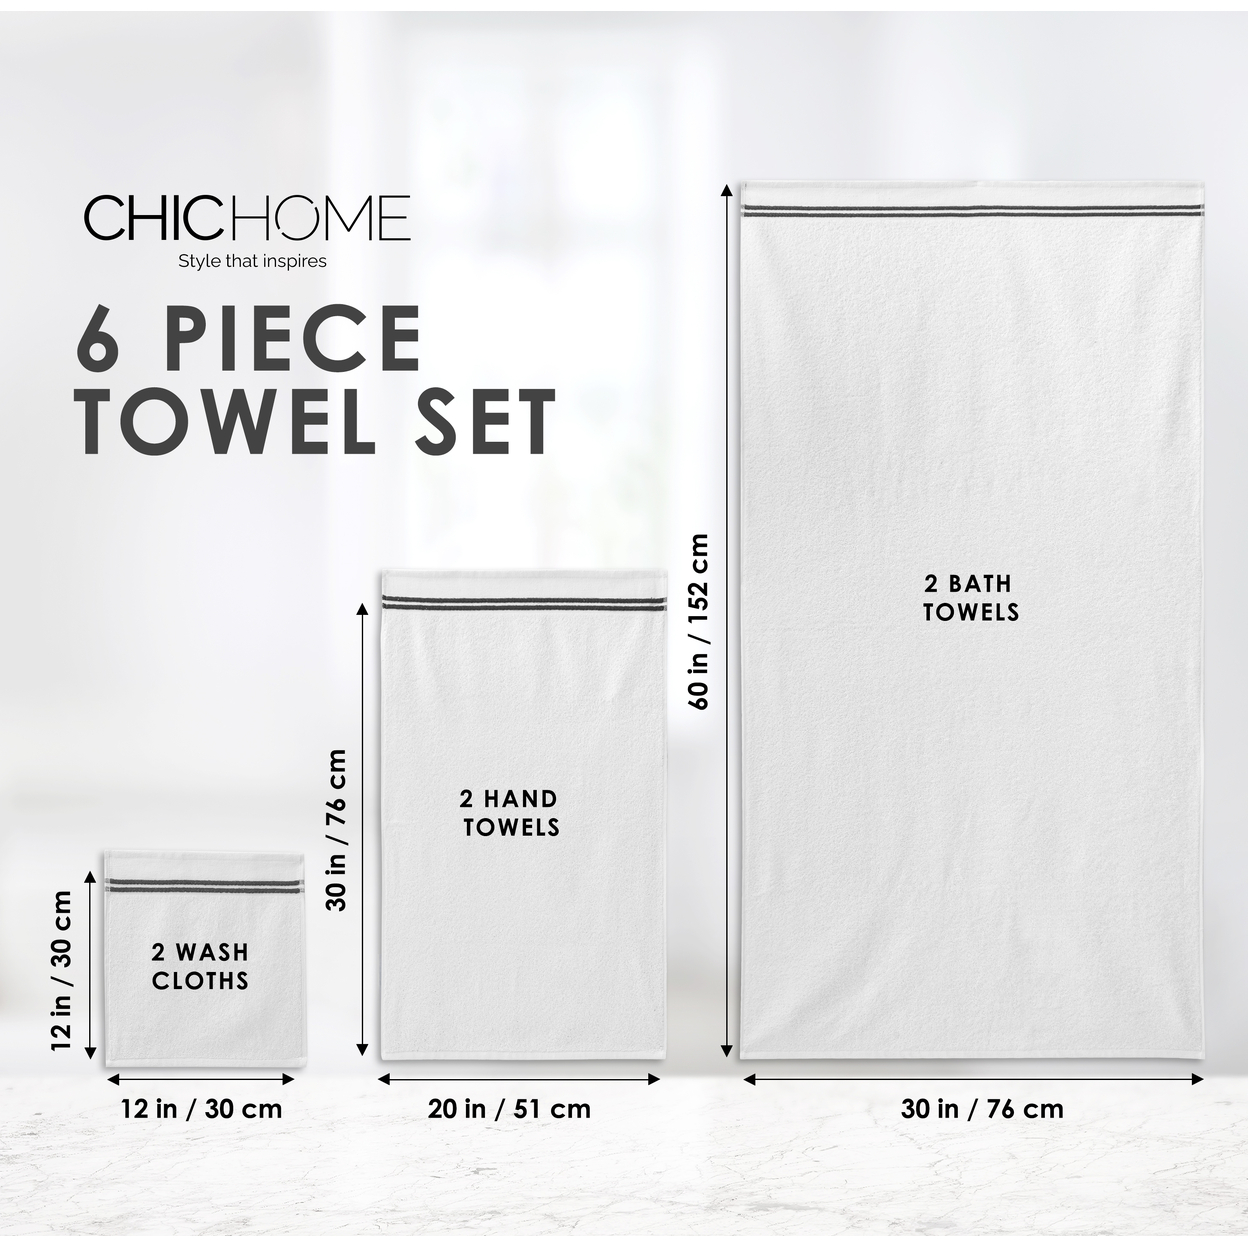 Chic Home Premium 6-Piece 100% Pure Turkish Cotton White Towel Set, Striped Hem, OEKO-TEX Standard 100 Certified - White-grey